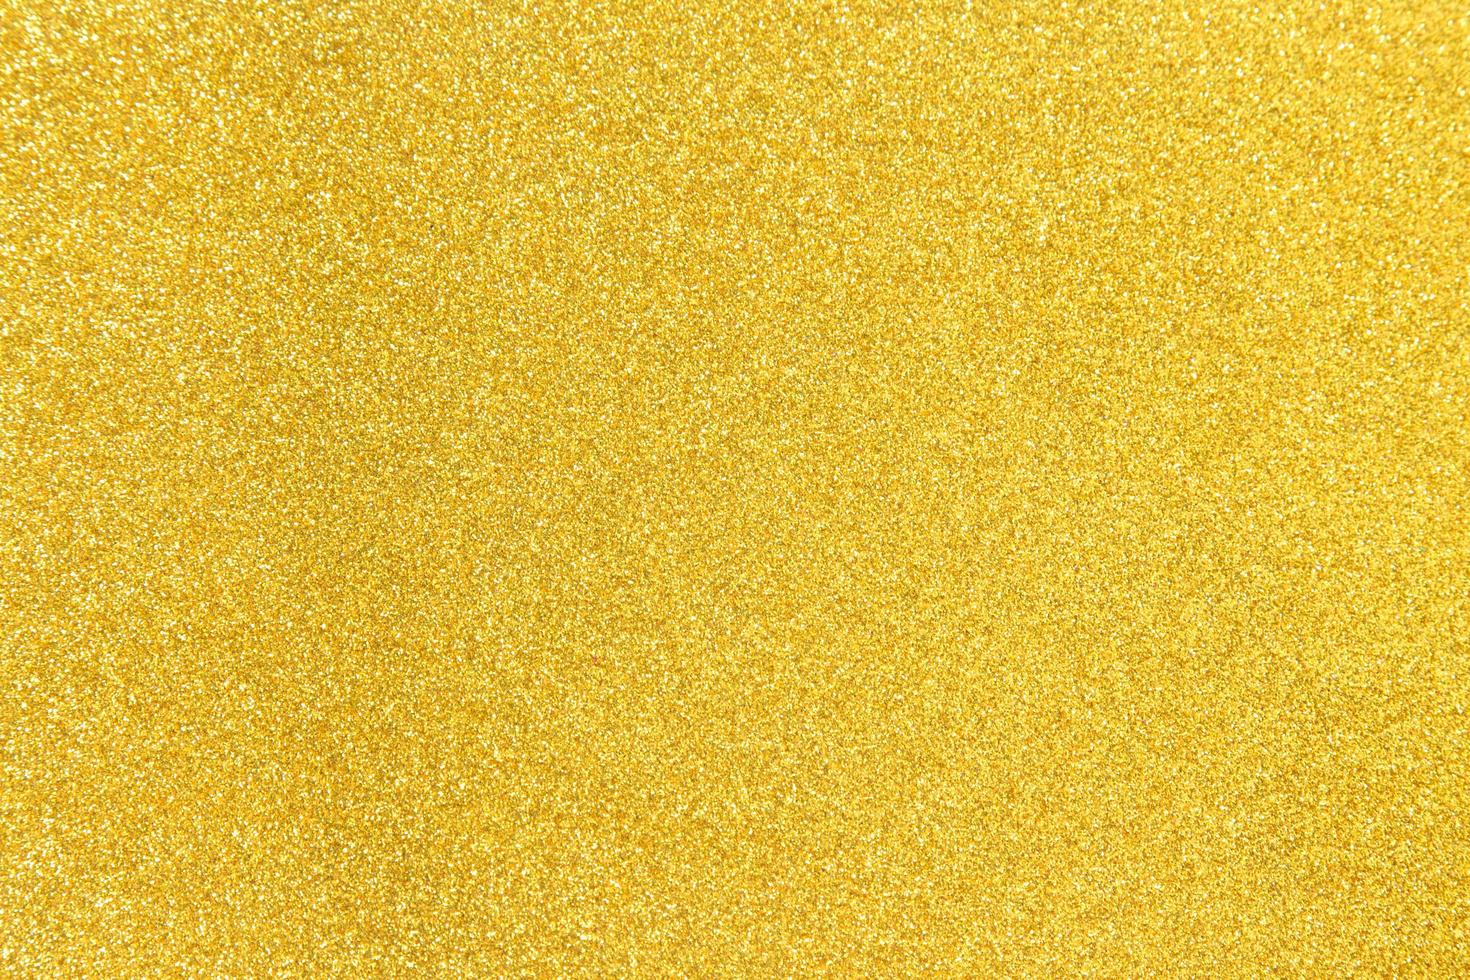 Golden glitter texture background 2901960 Stock Photo at Vecteezy